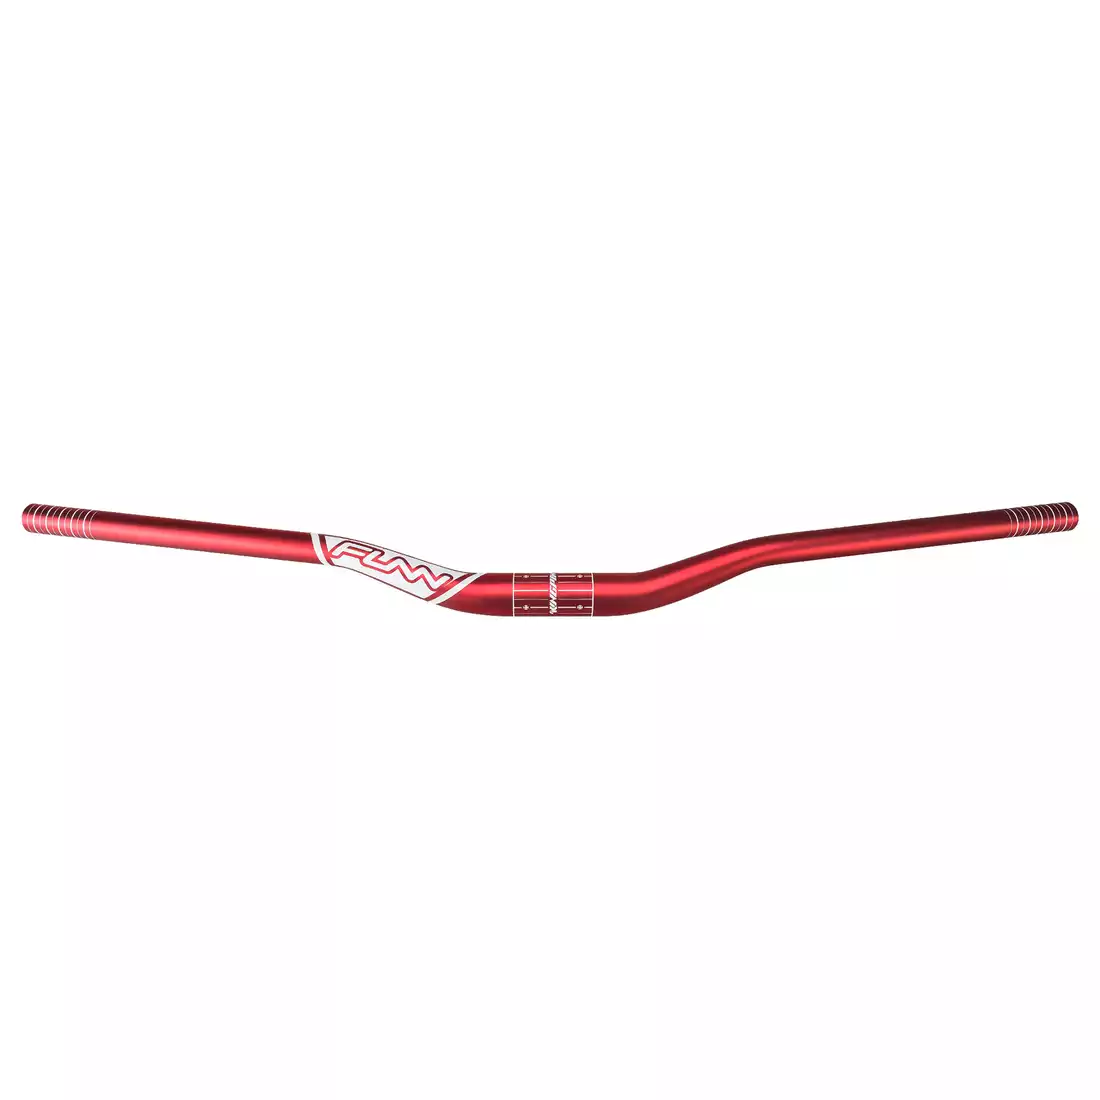 FUNN KINGPIN 785/35/7 mm Bicycle handlebars Red